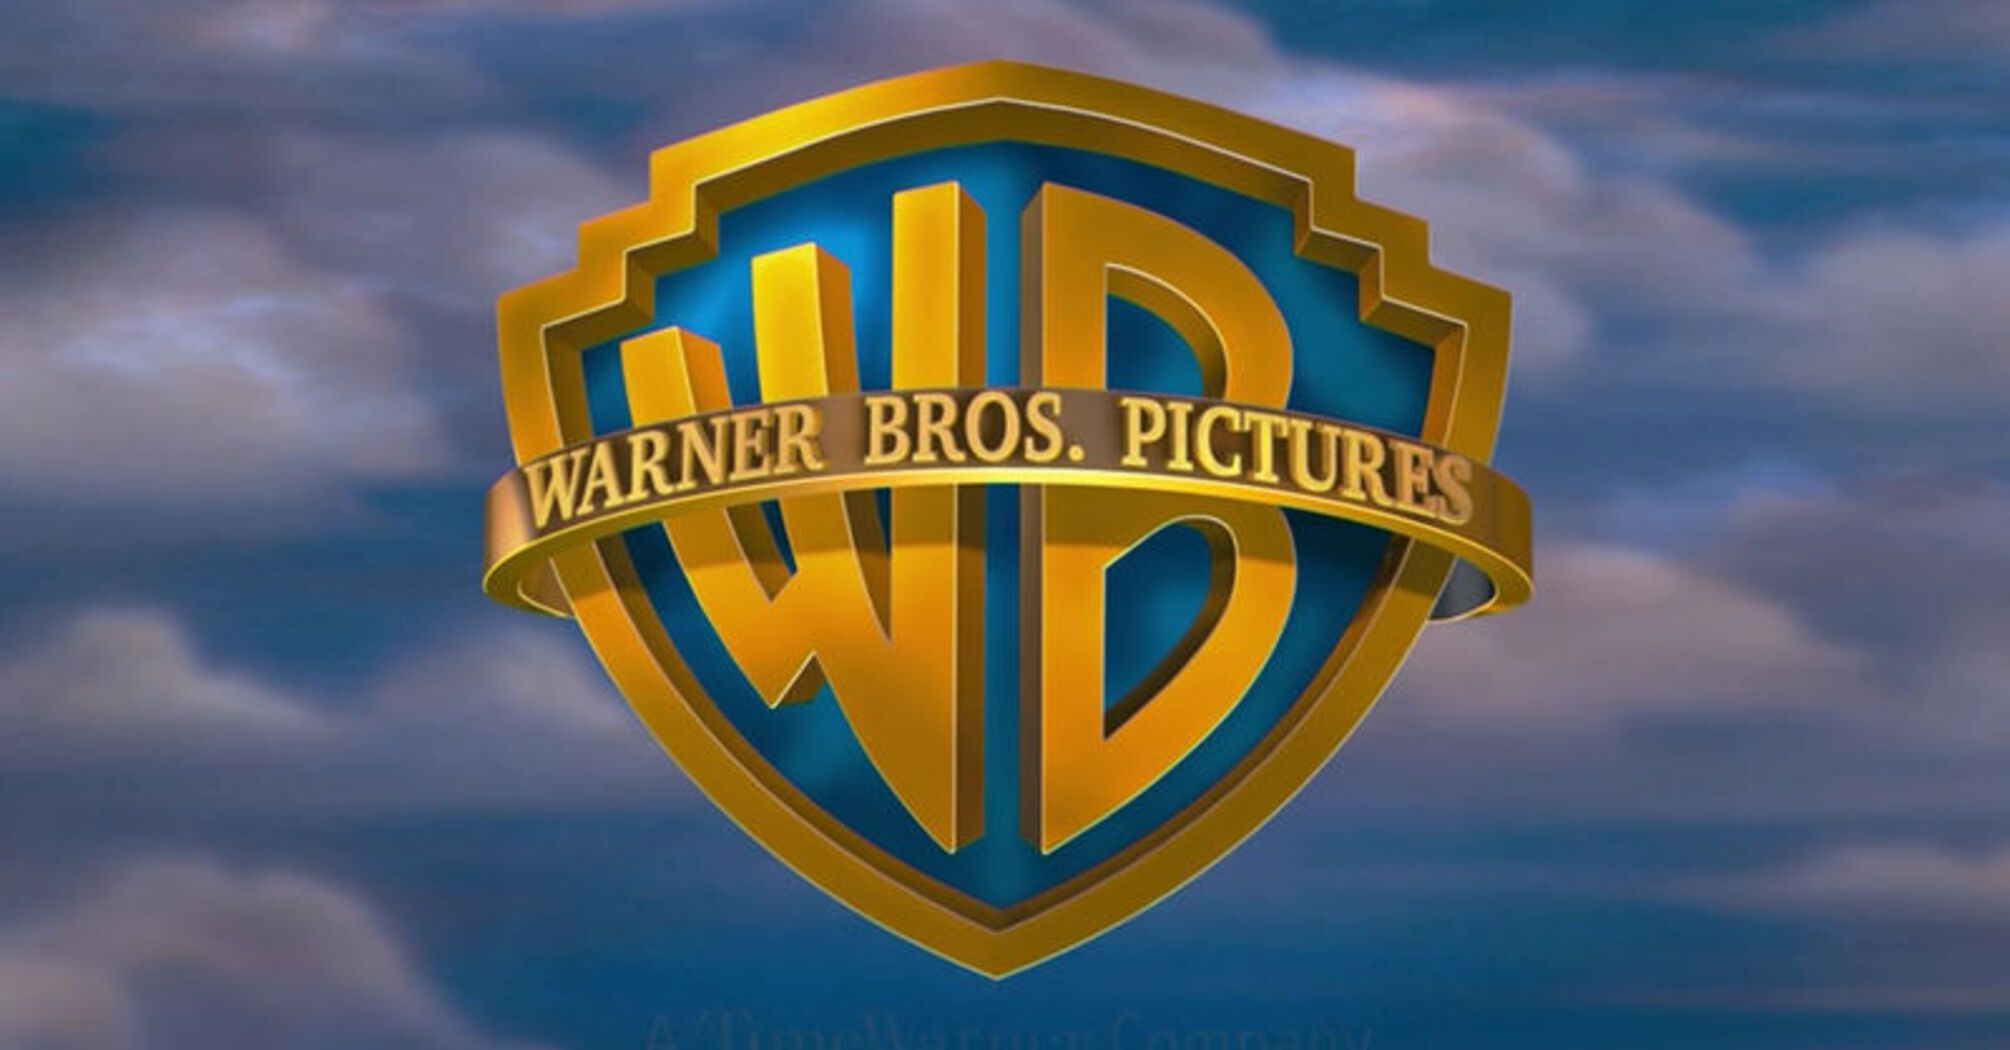 Top 5 Warner Bros. Movies of 2023, Ranked by Box Office